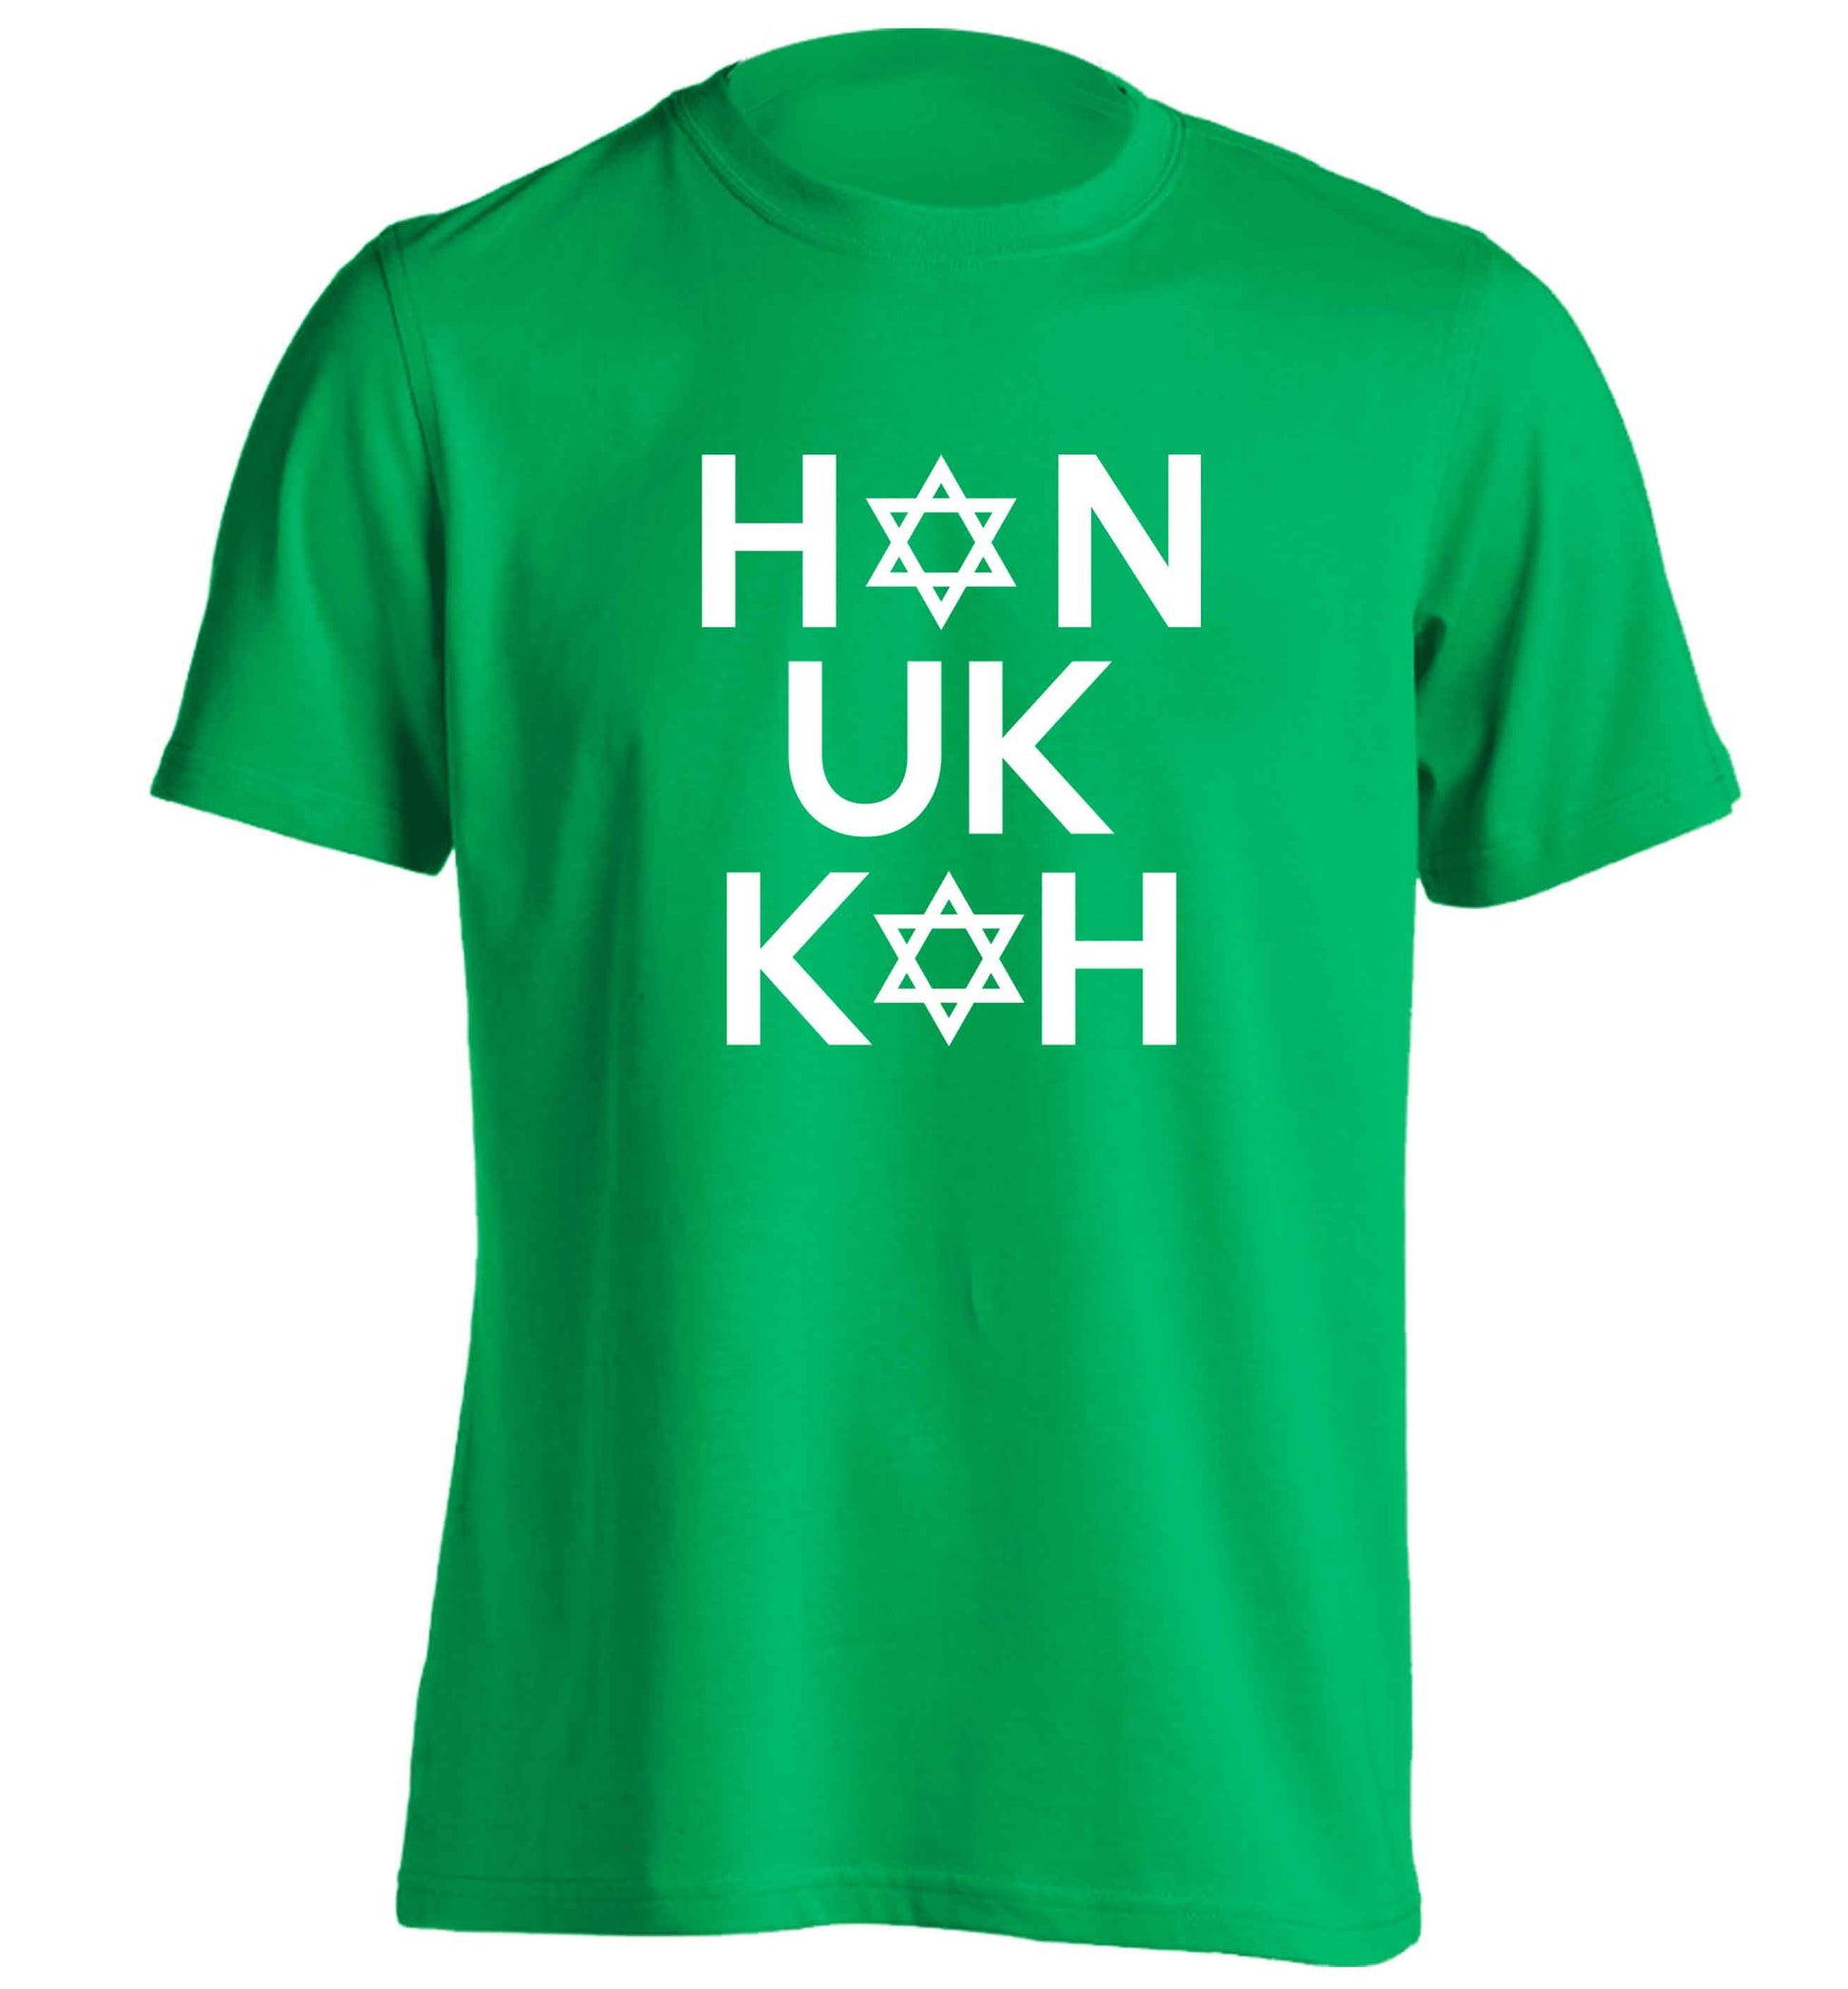 Han uk kah  Hanukkah star of david adults unisex green Tshirt 2XL